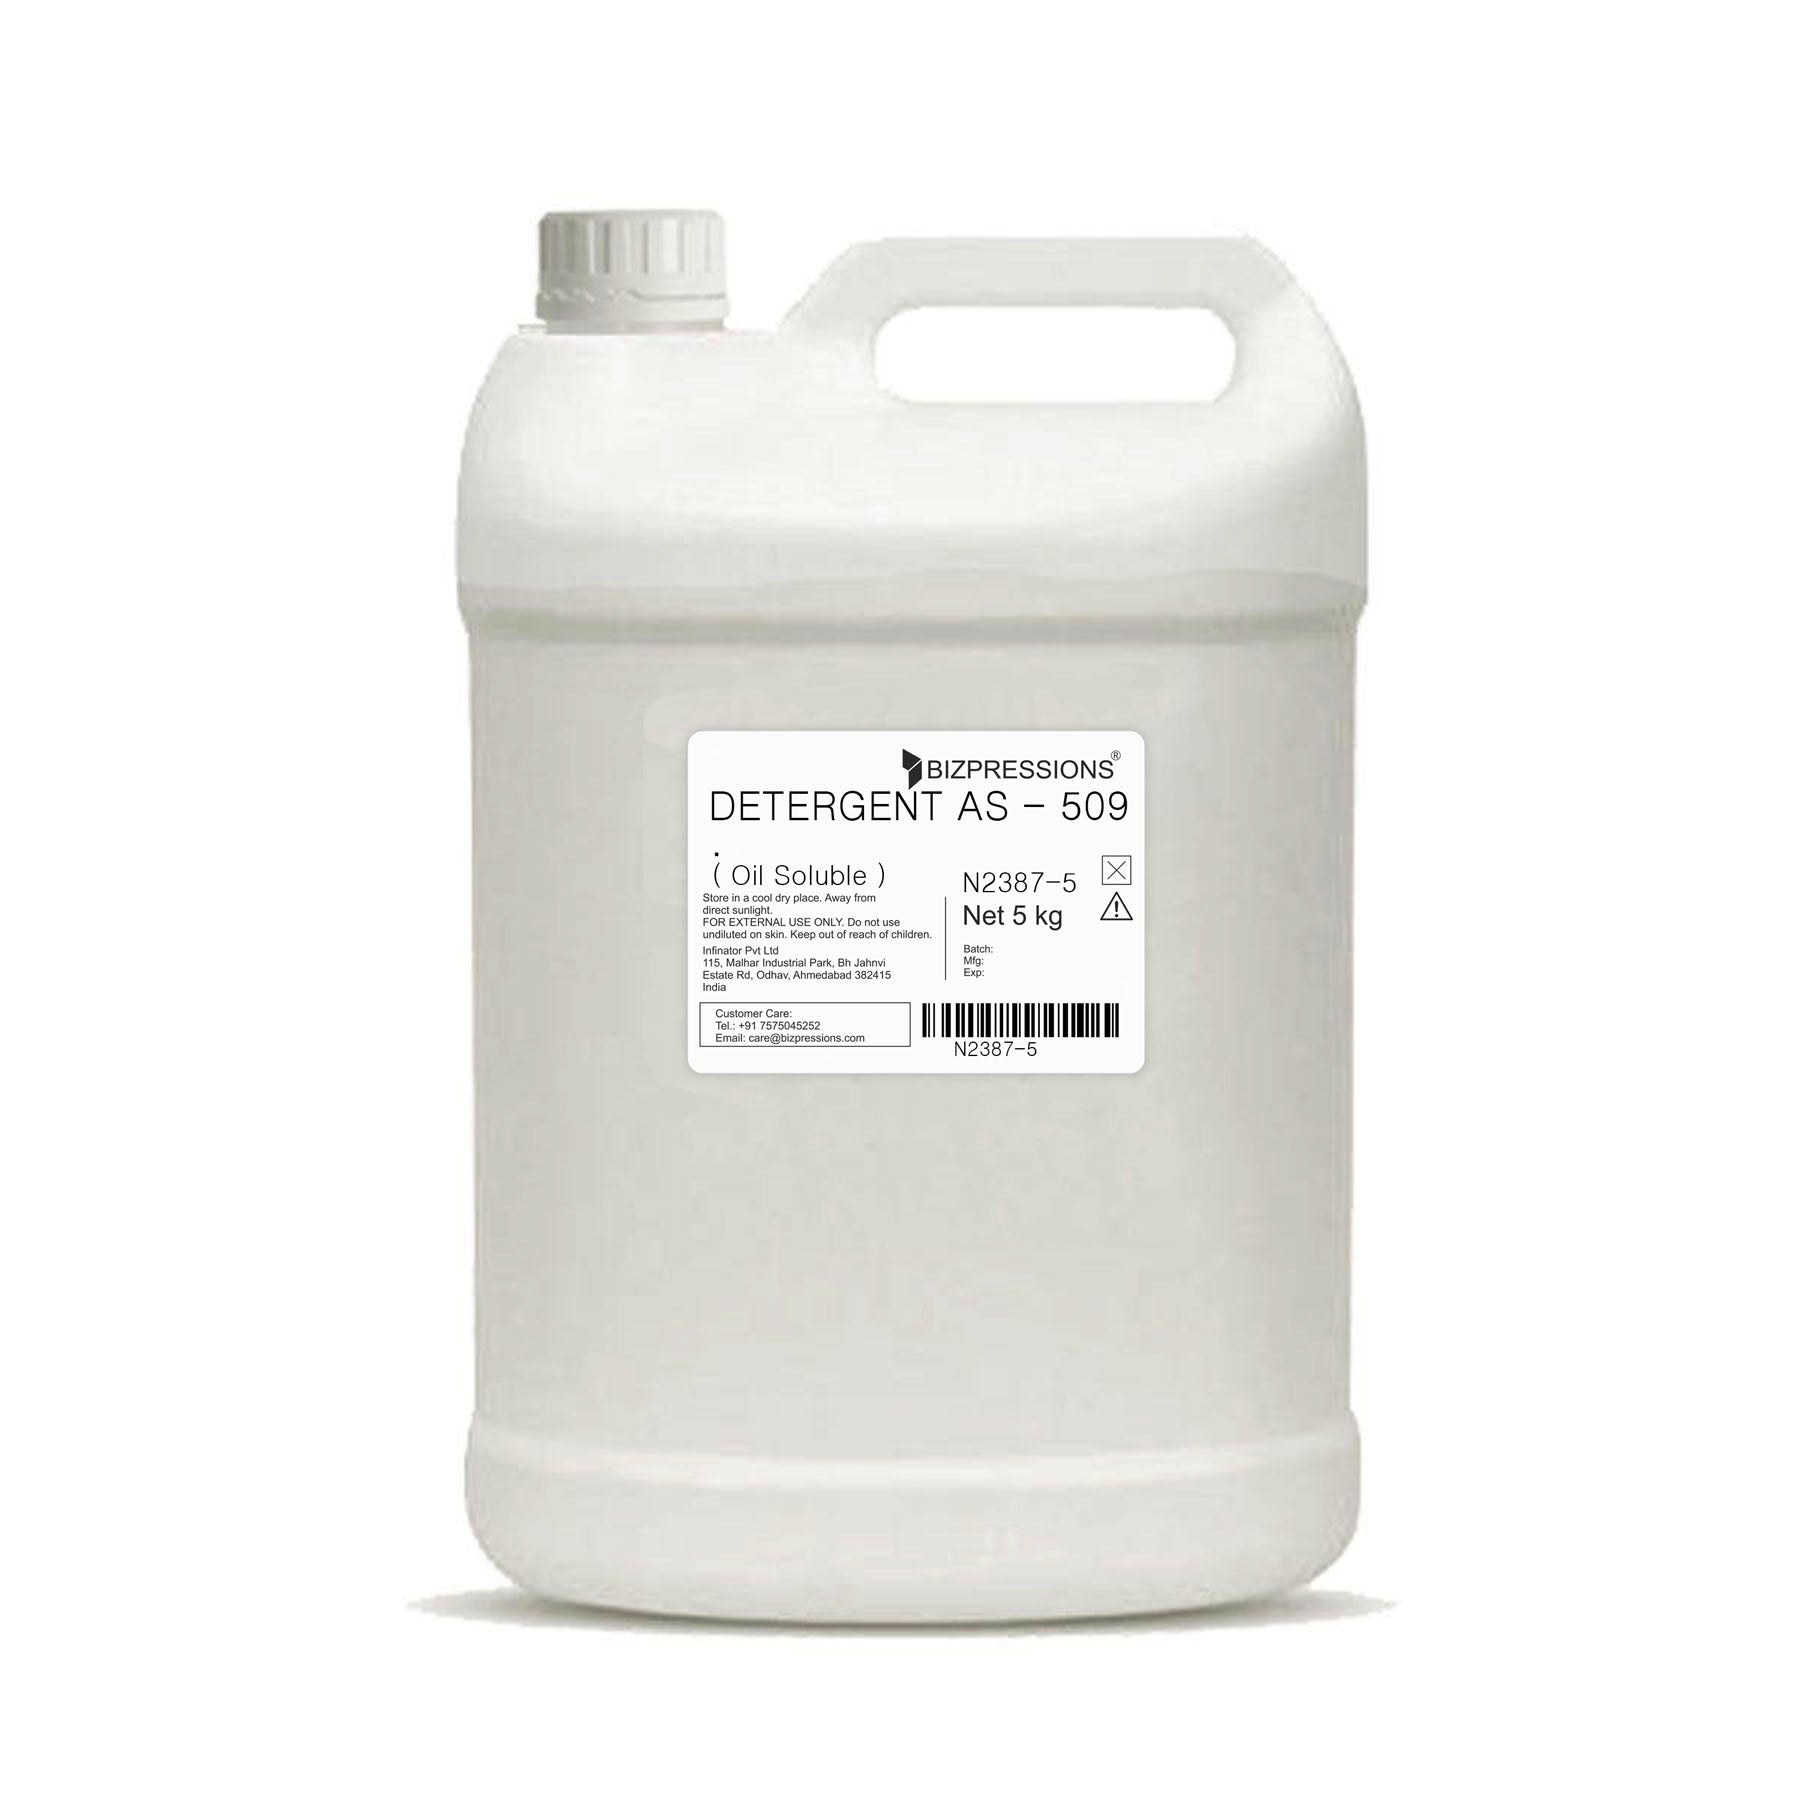 DETERGENT AS - 509 - Fragrance ( Oil Soluble ) - 5 kg